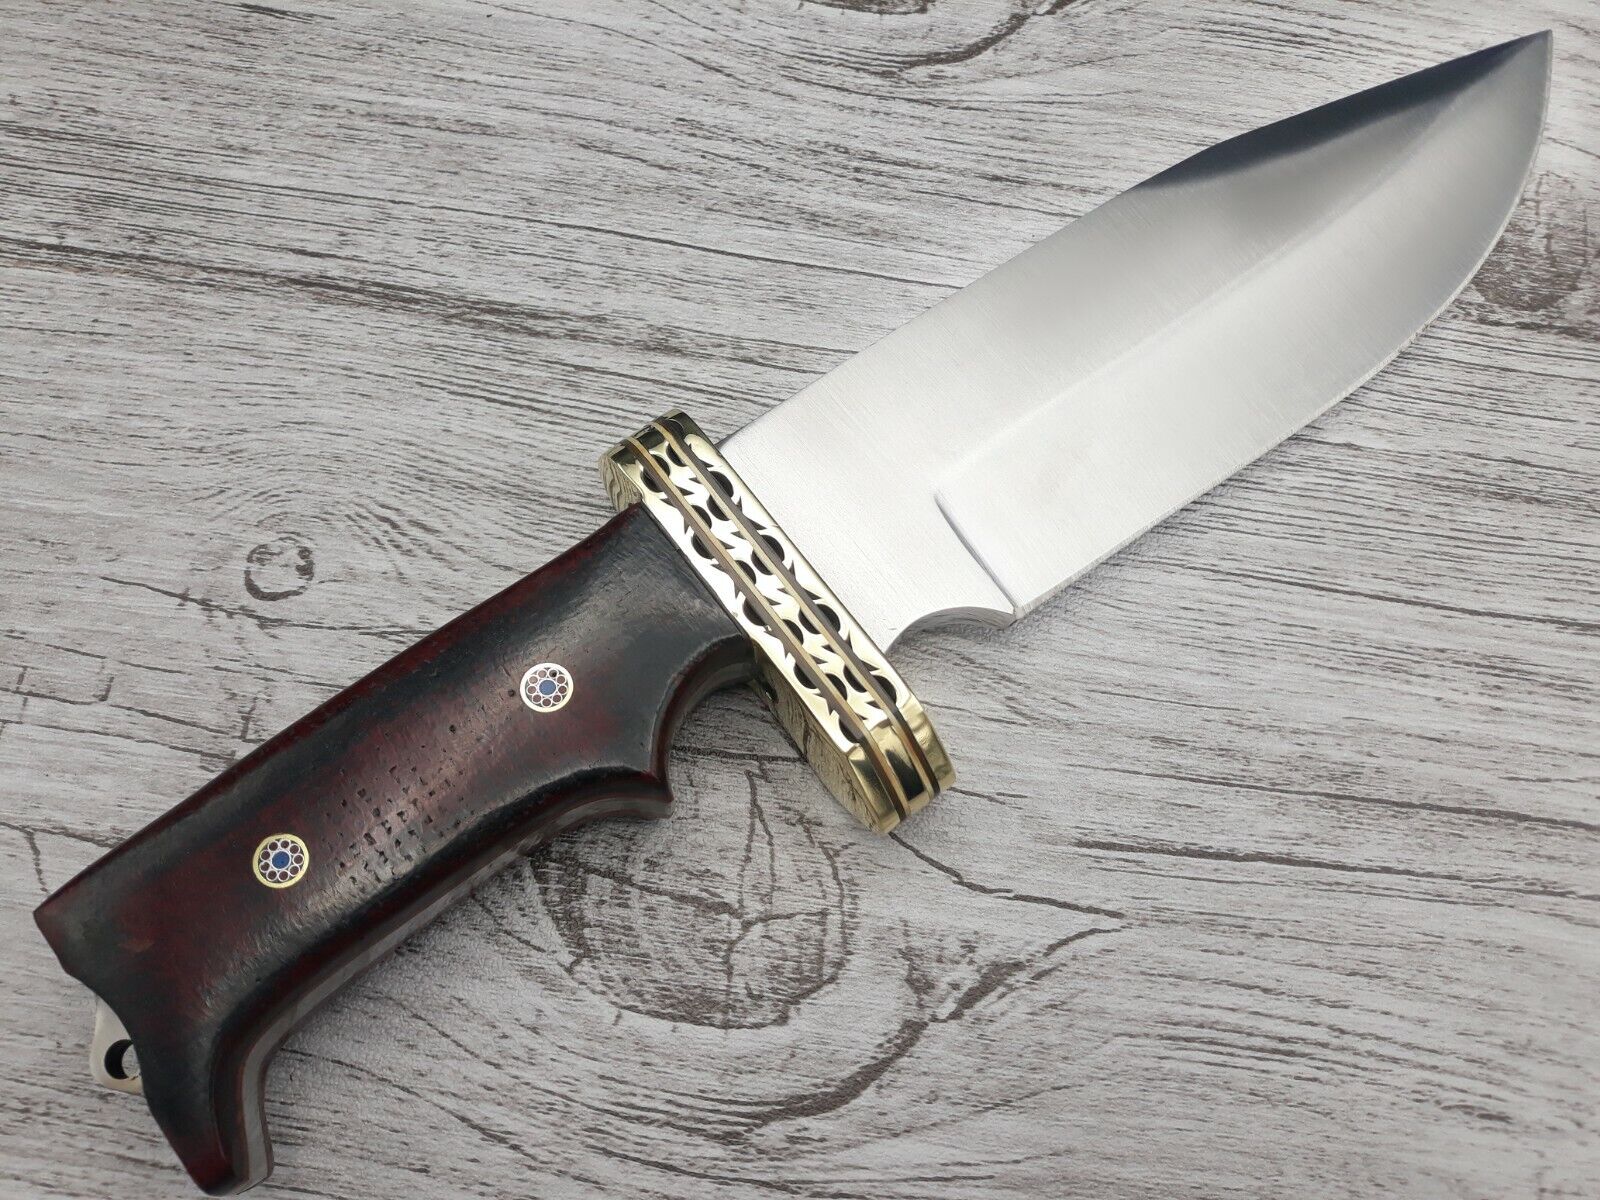  HANDCRAFTED RARE MASSIVE FULLER COMBAT DAGGER KNIFE MICARTA HANDLE  SHEATH